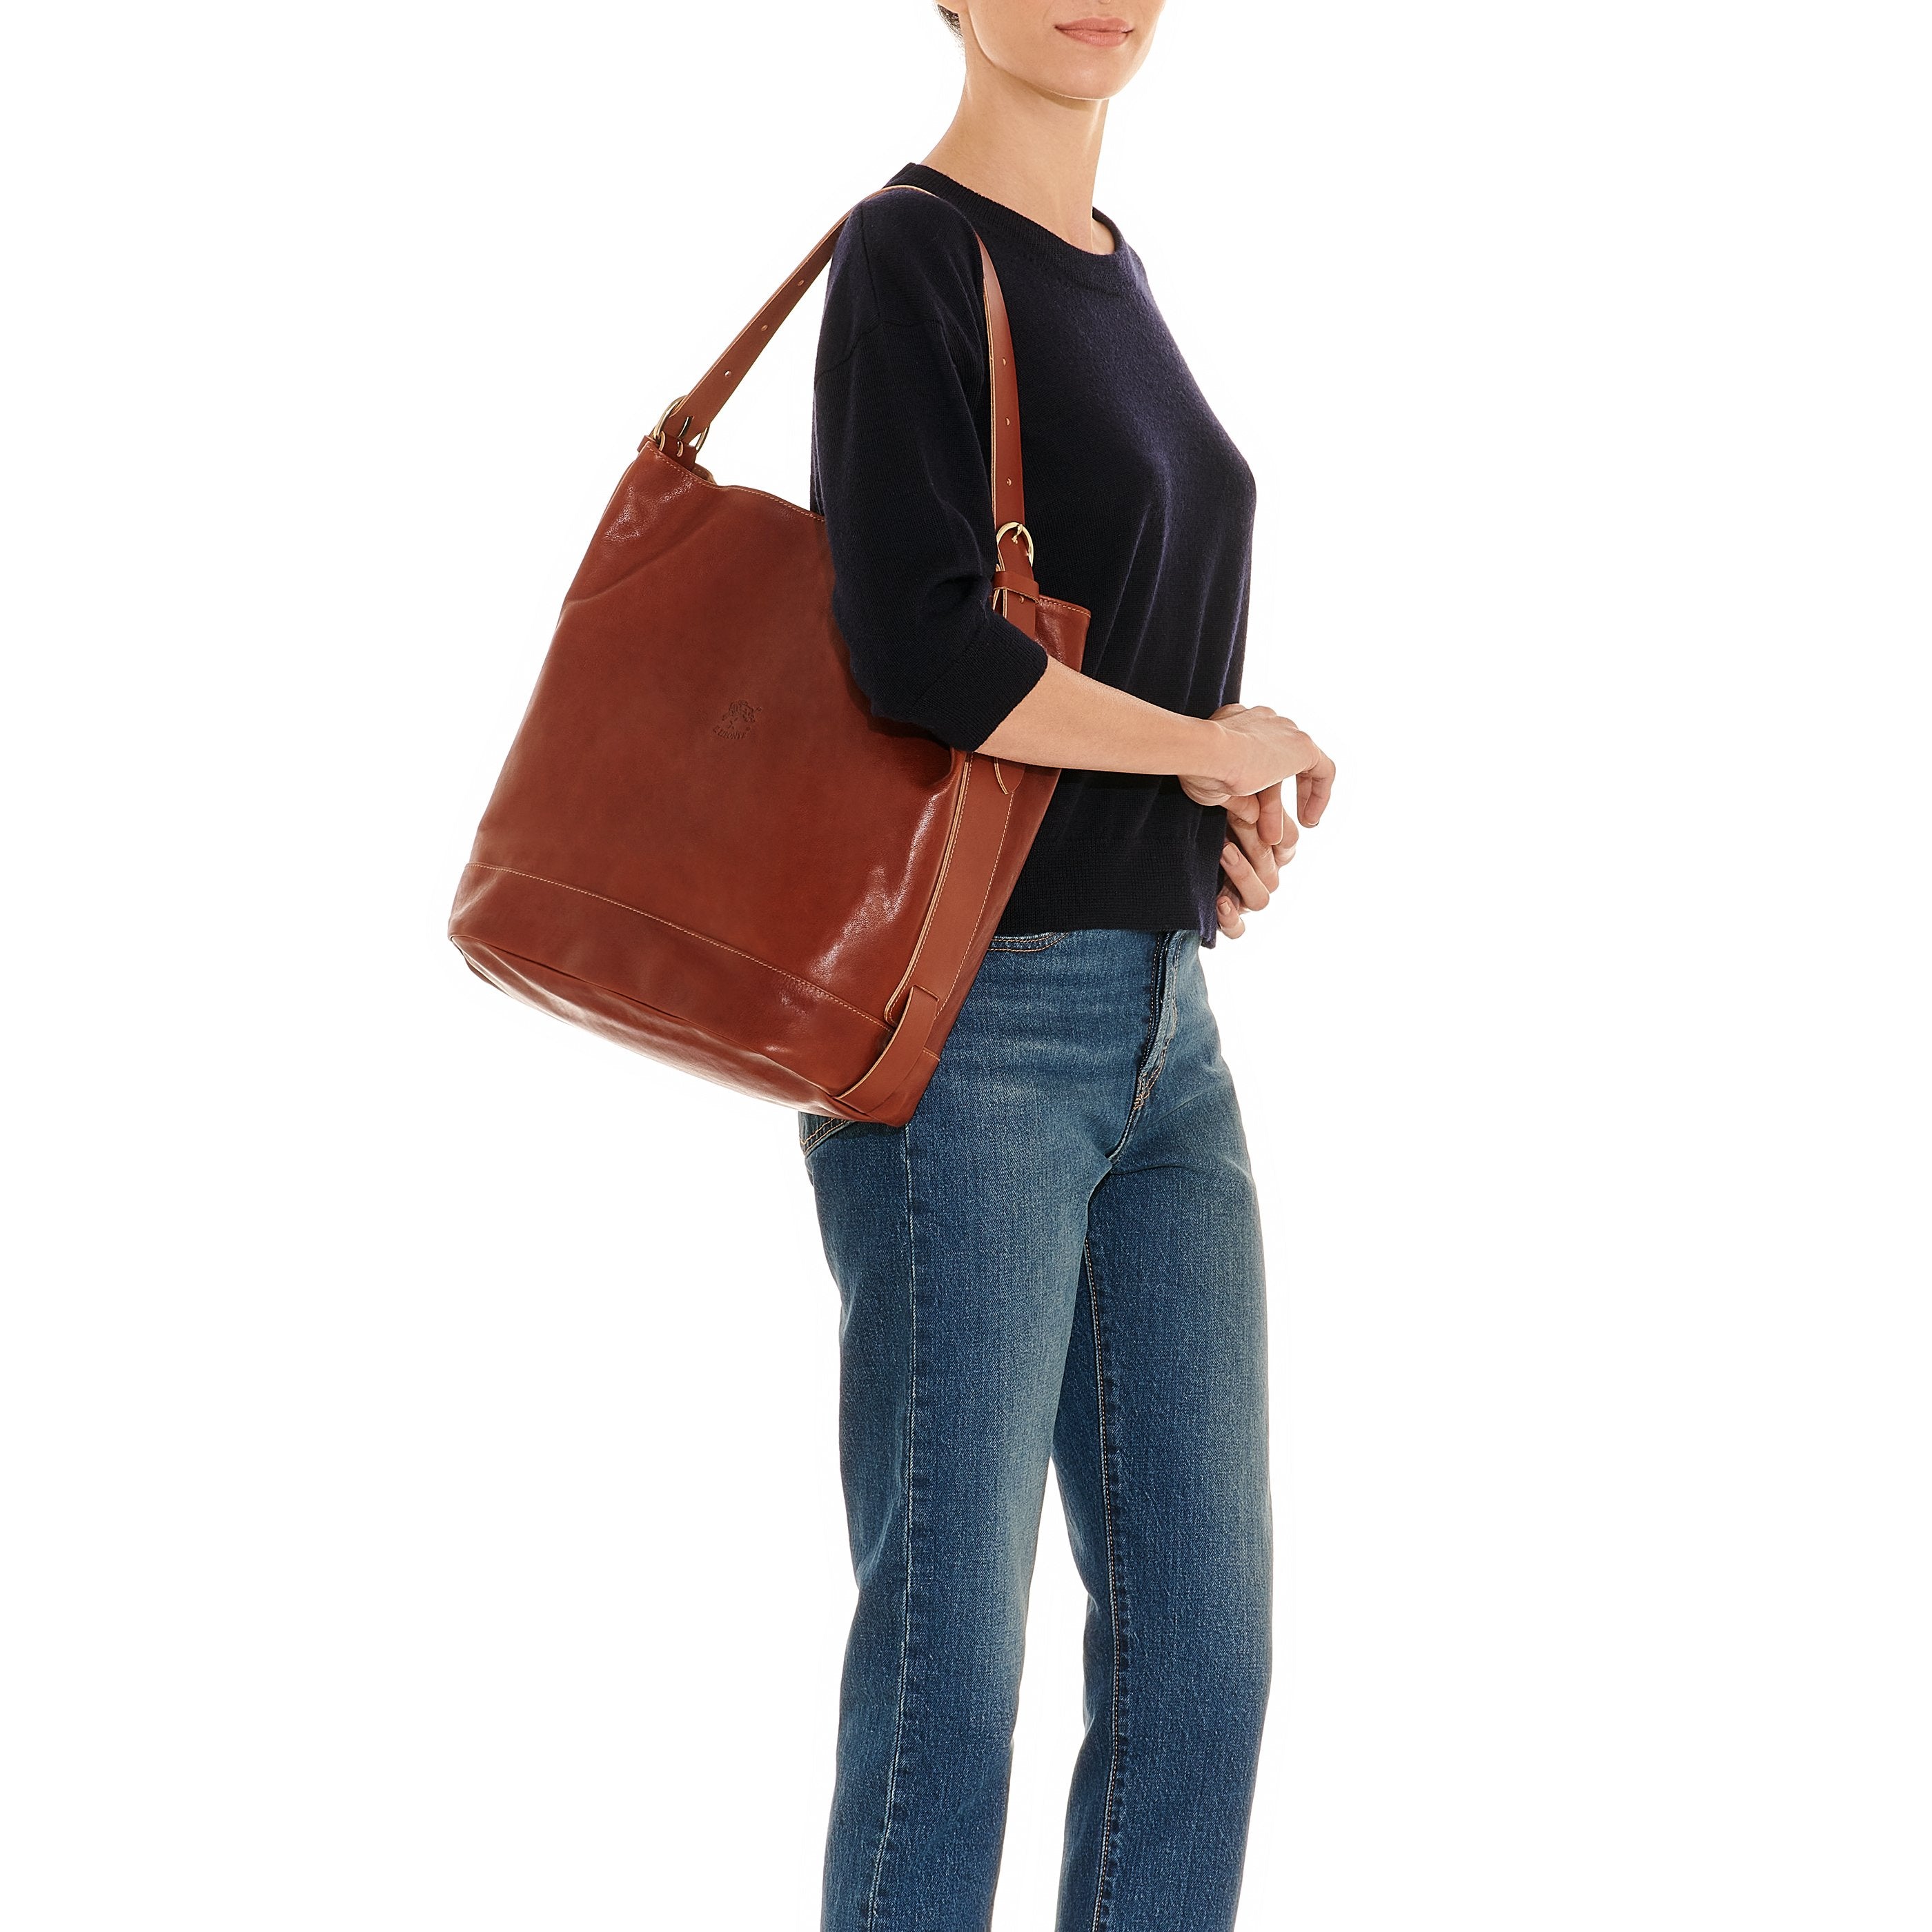 Rubino | Women's crossbody bag in leather color milk